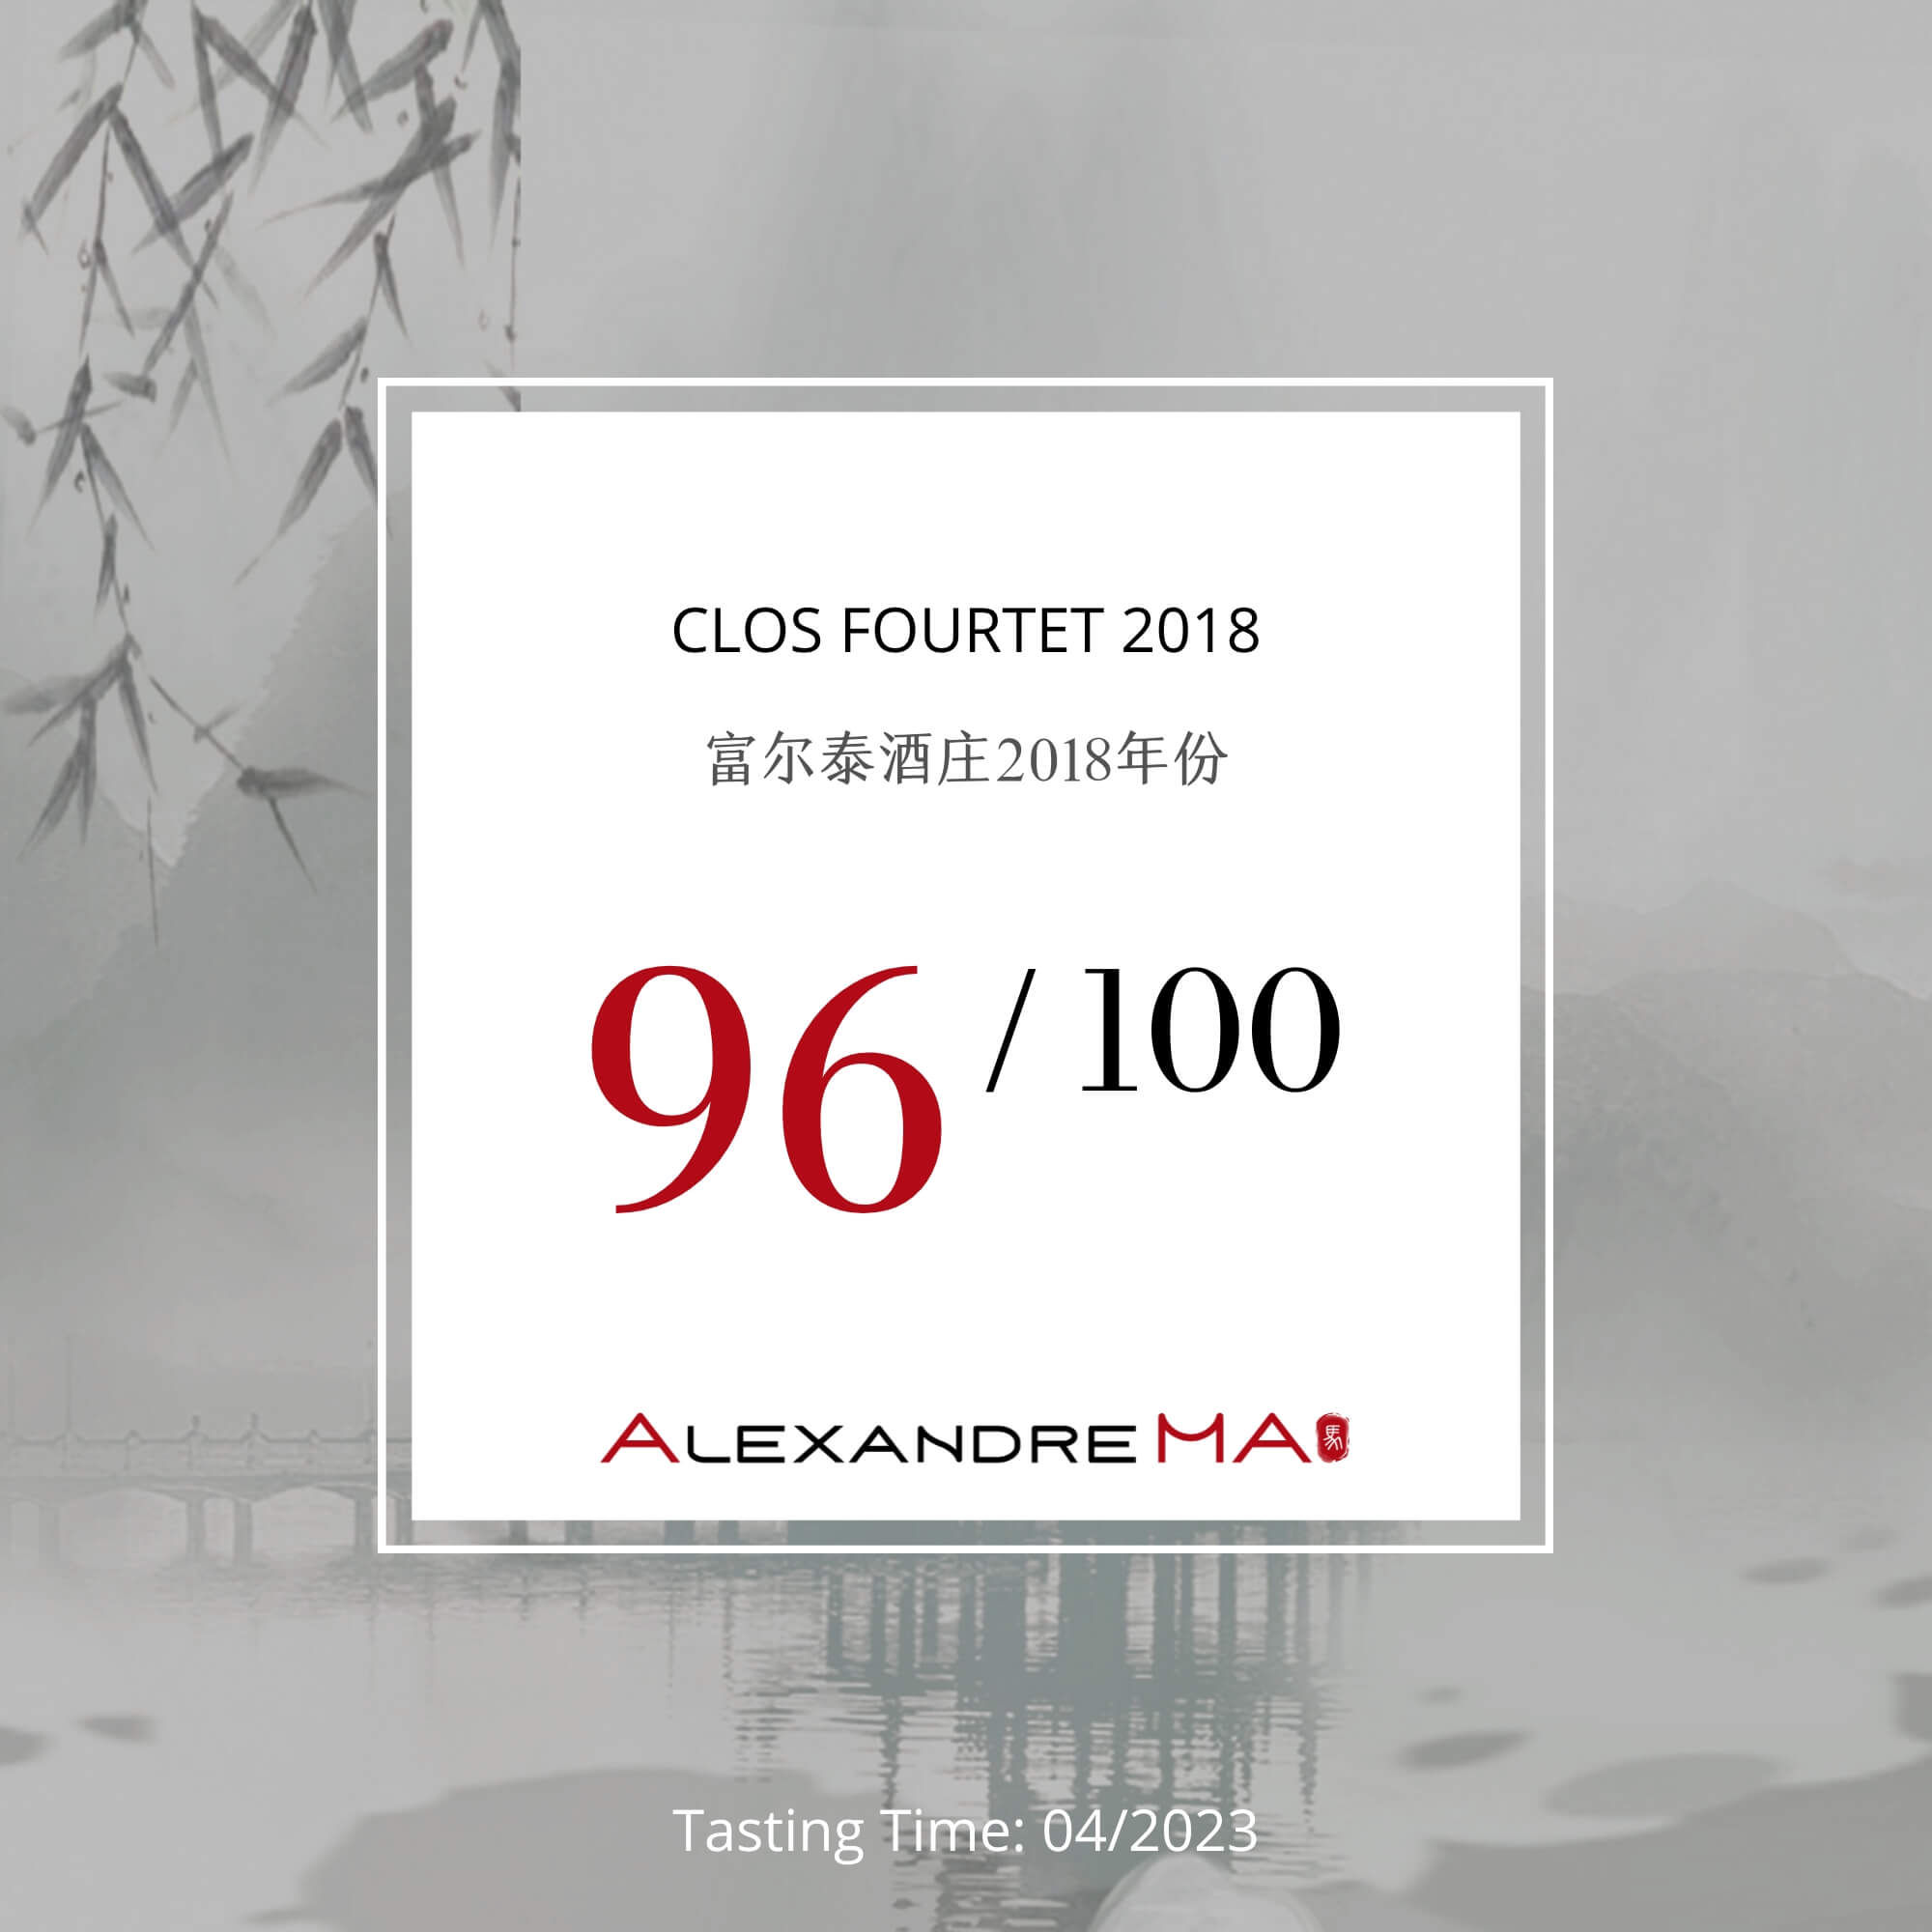 Clos Fourtet 2018 富尔泰酒庄 - Alexandre Ma